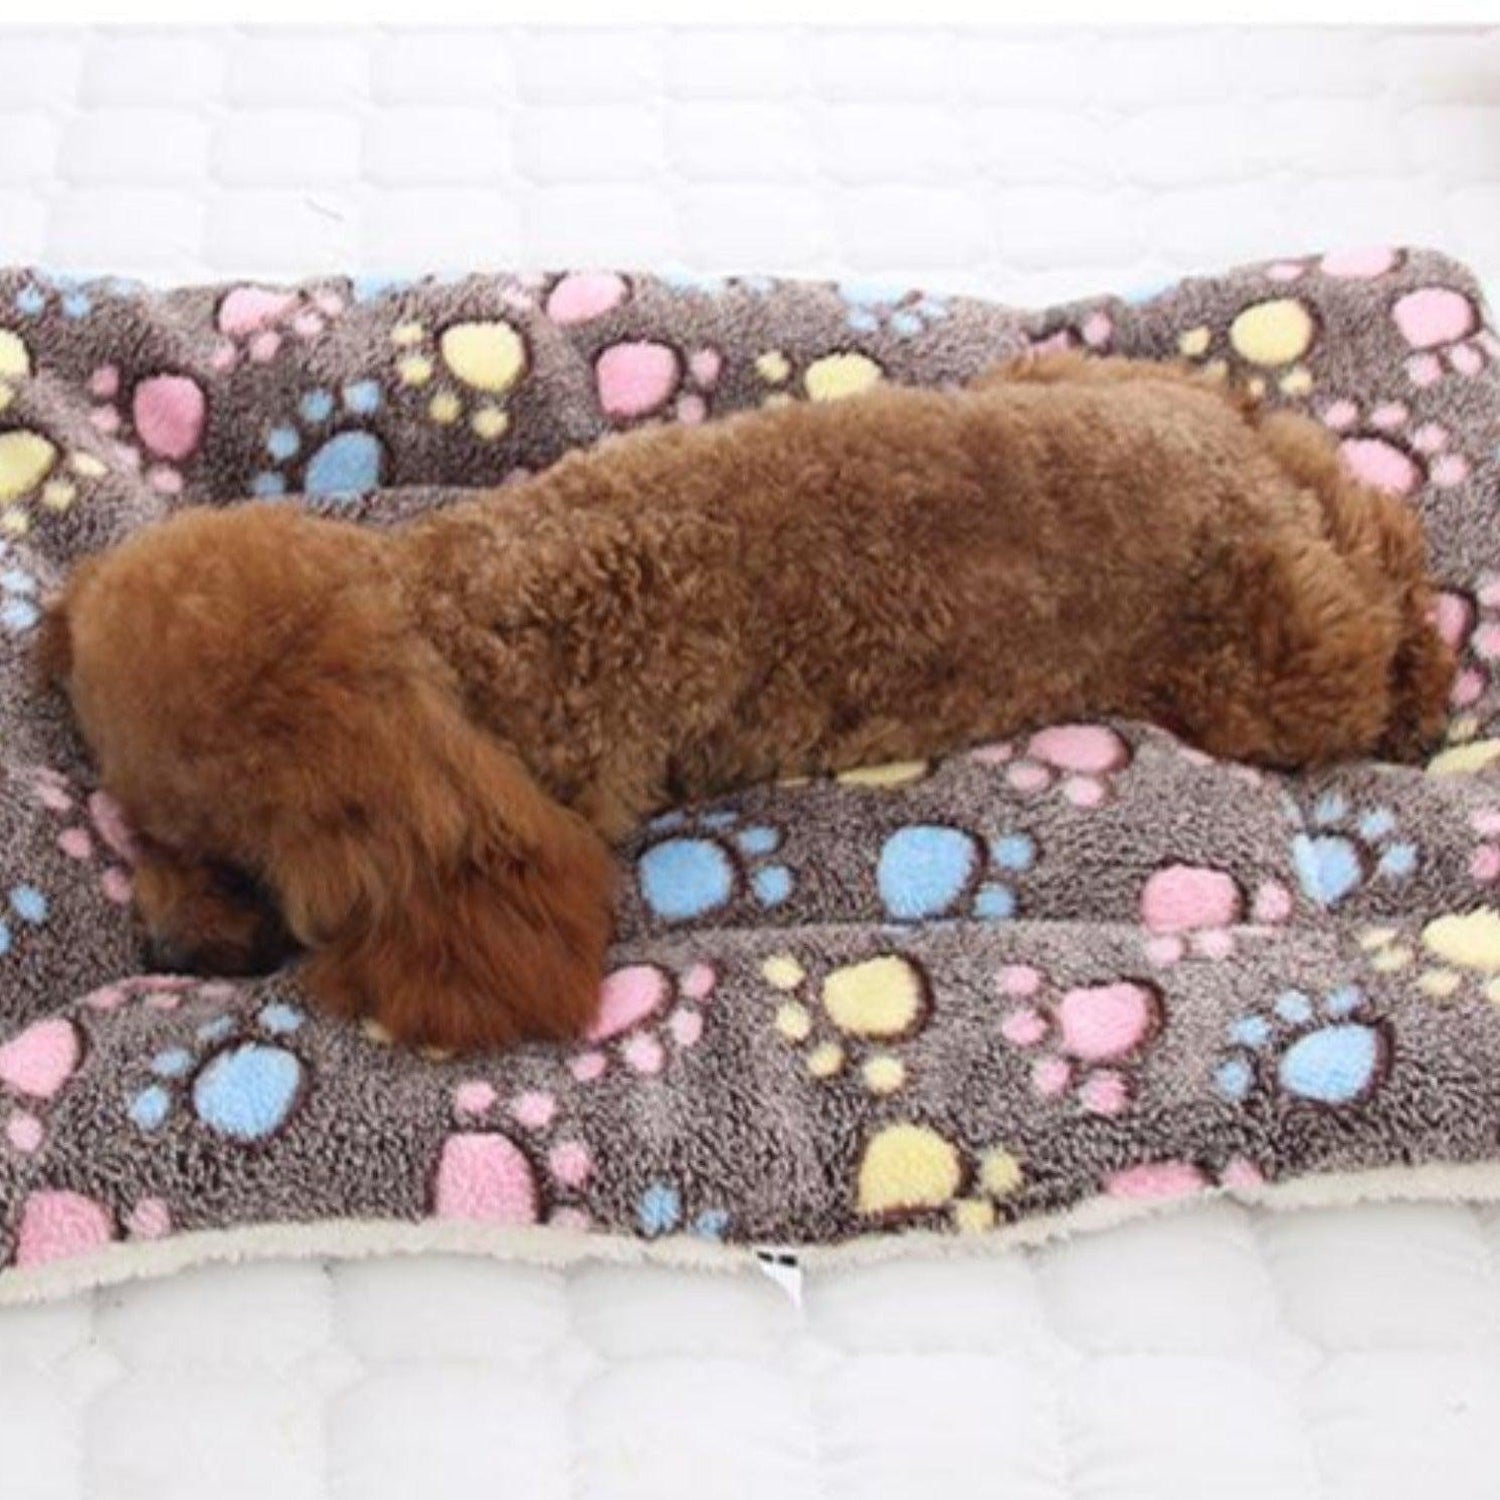 Soft Cozy Dog Blanket Mat -Paw Print